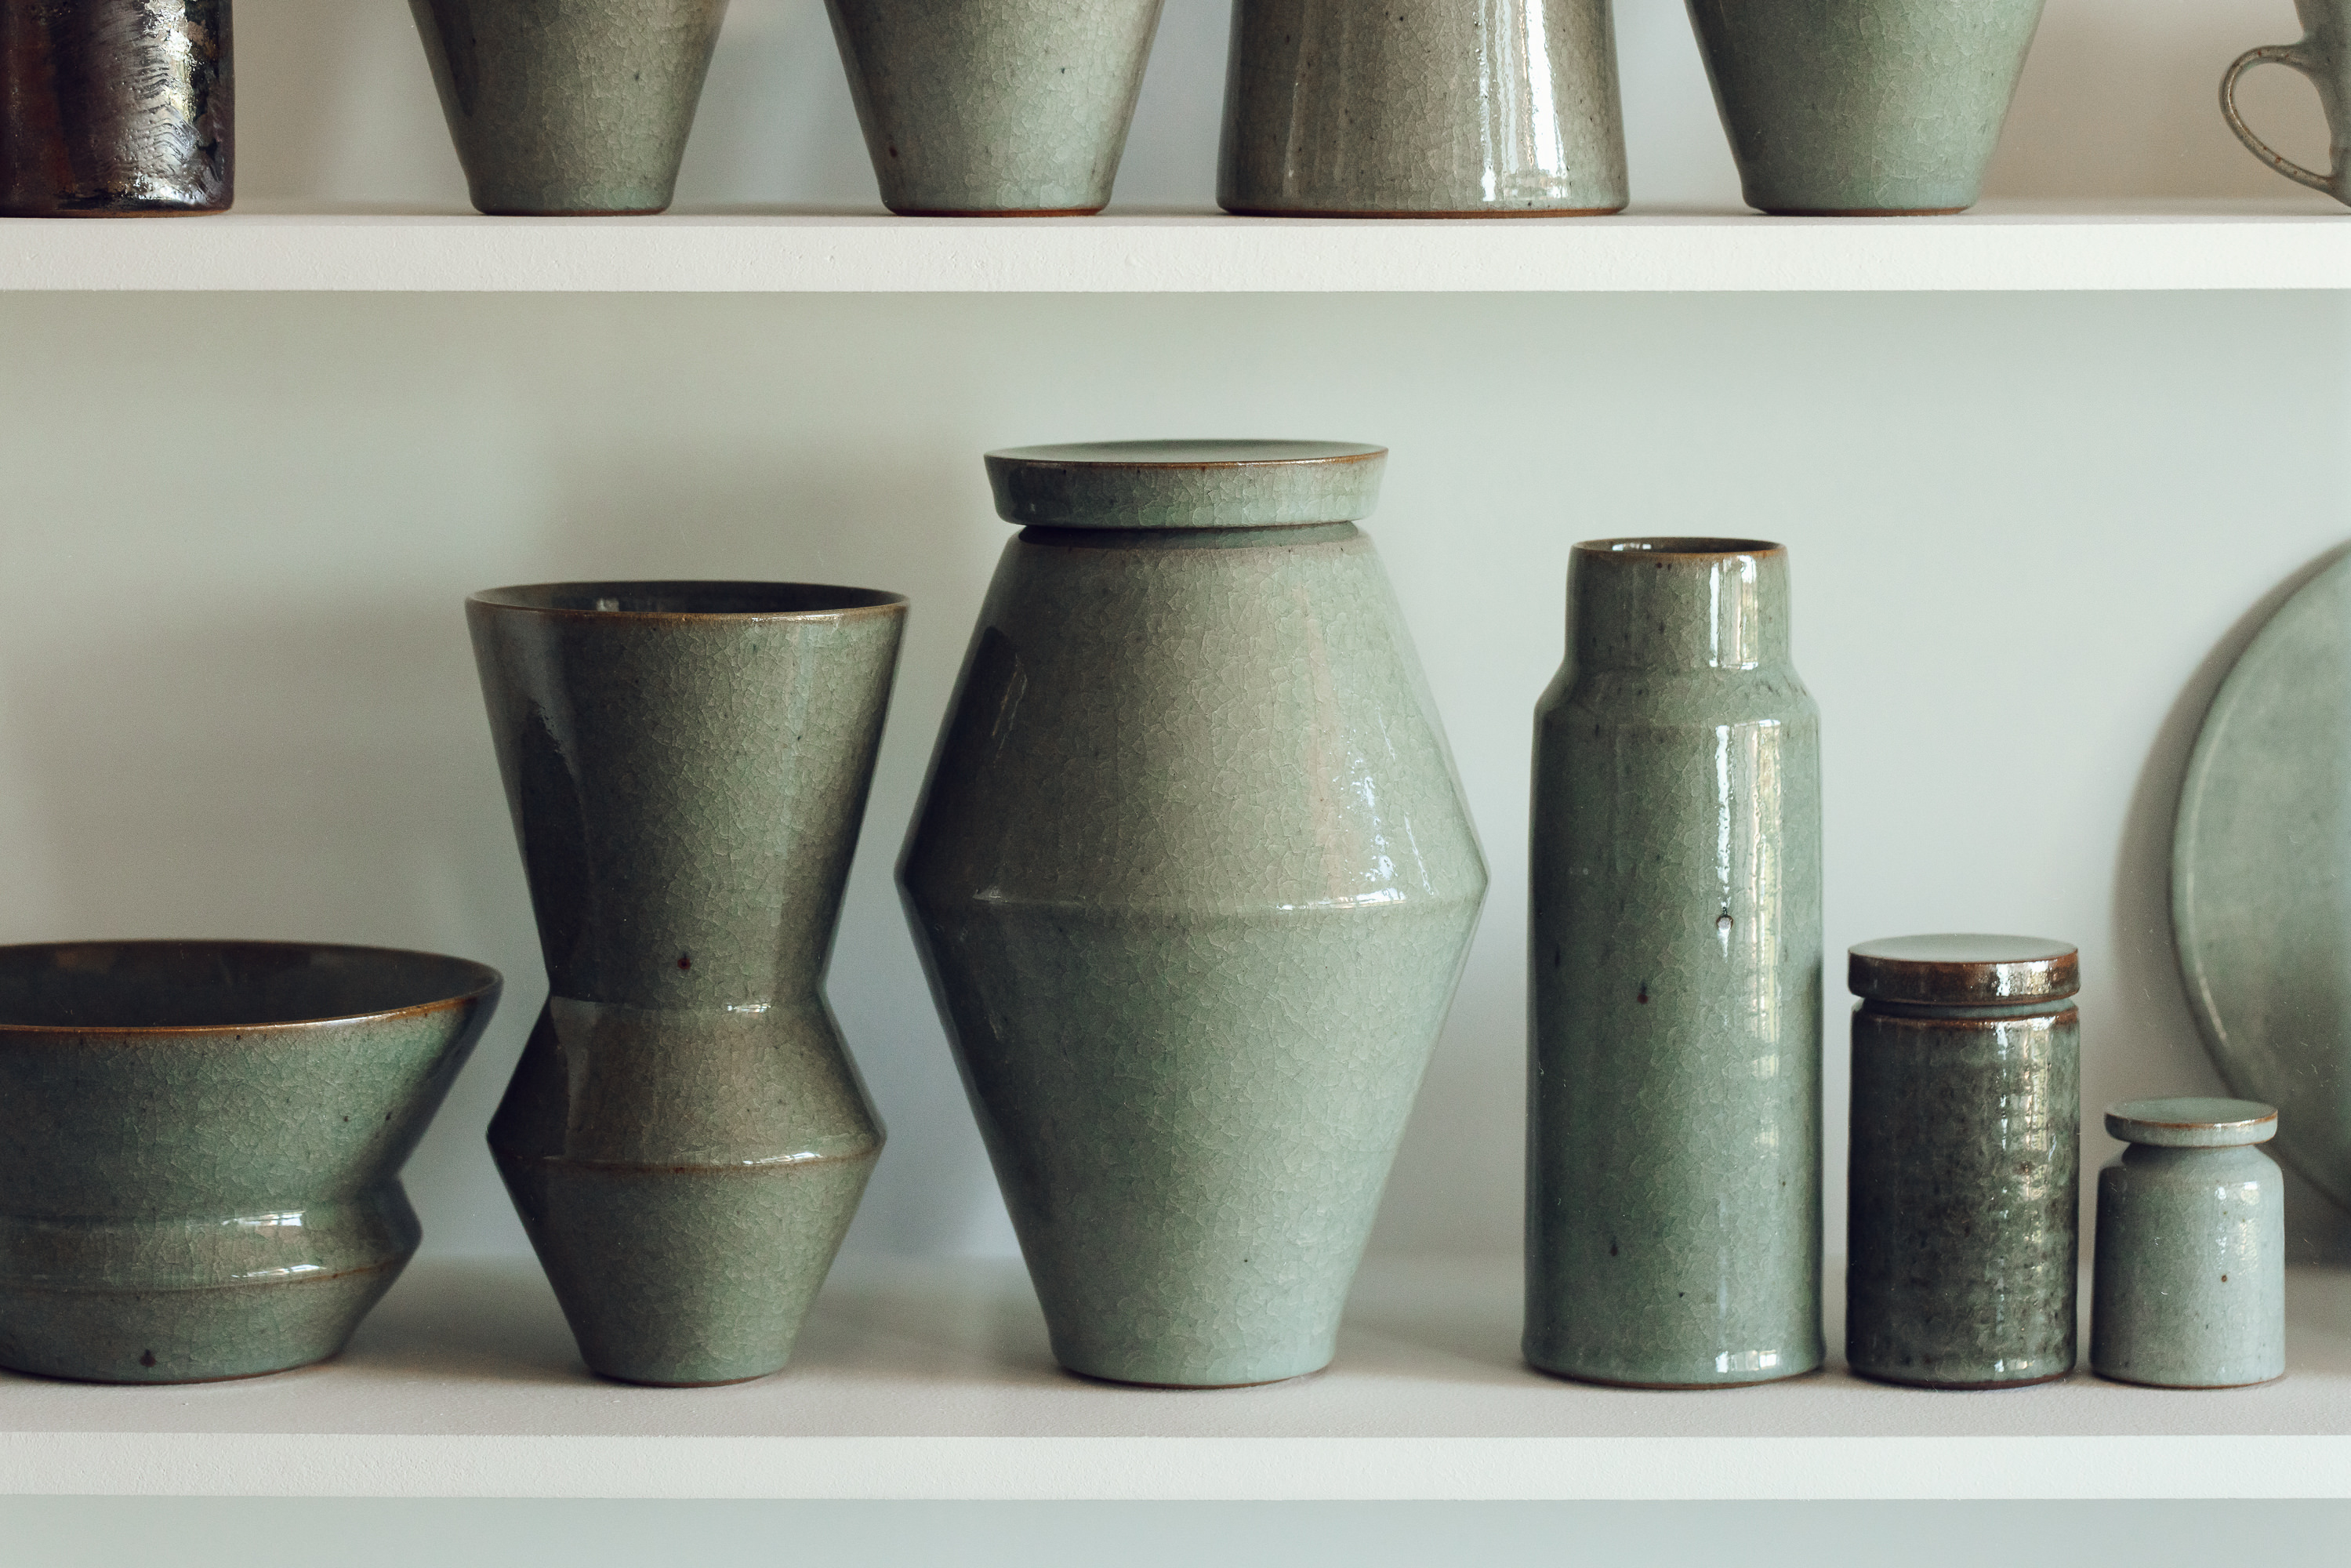 A selection of ceramic vessels on a shelf